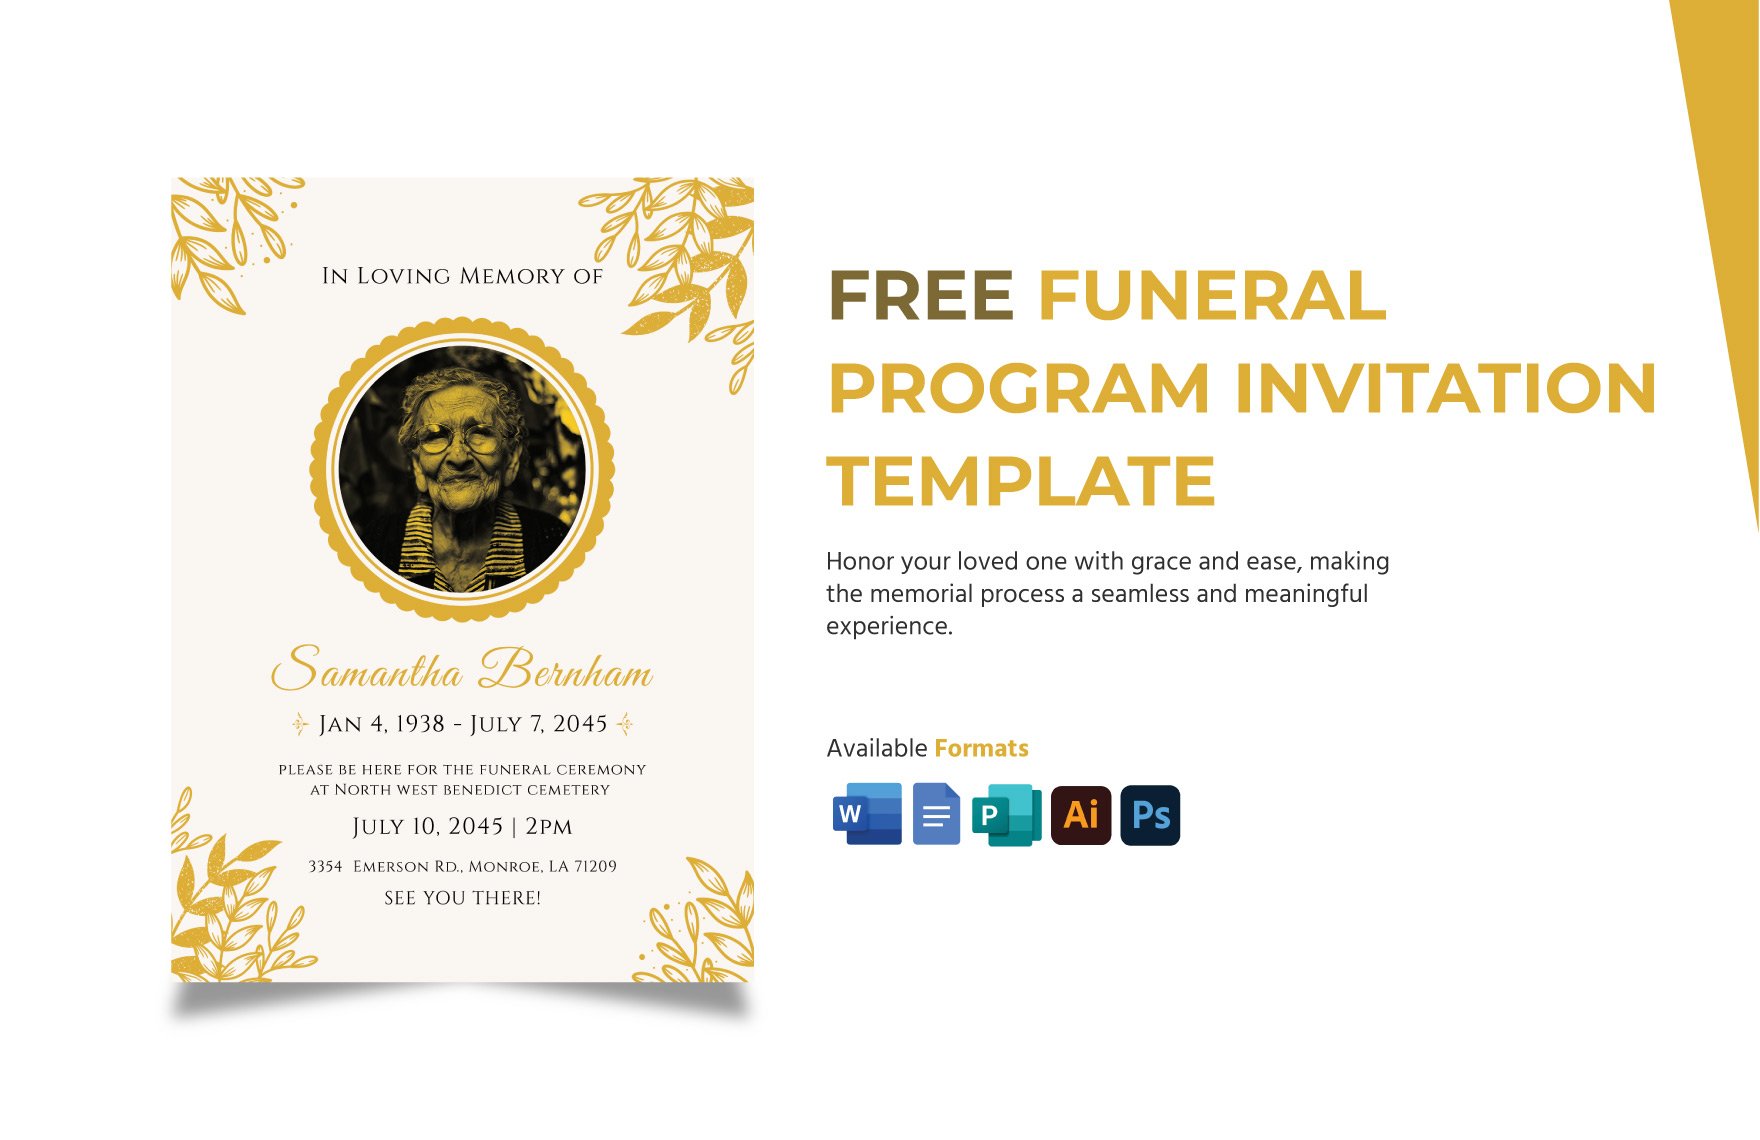 Funeral Program Invitation Template